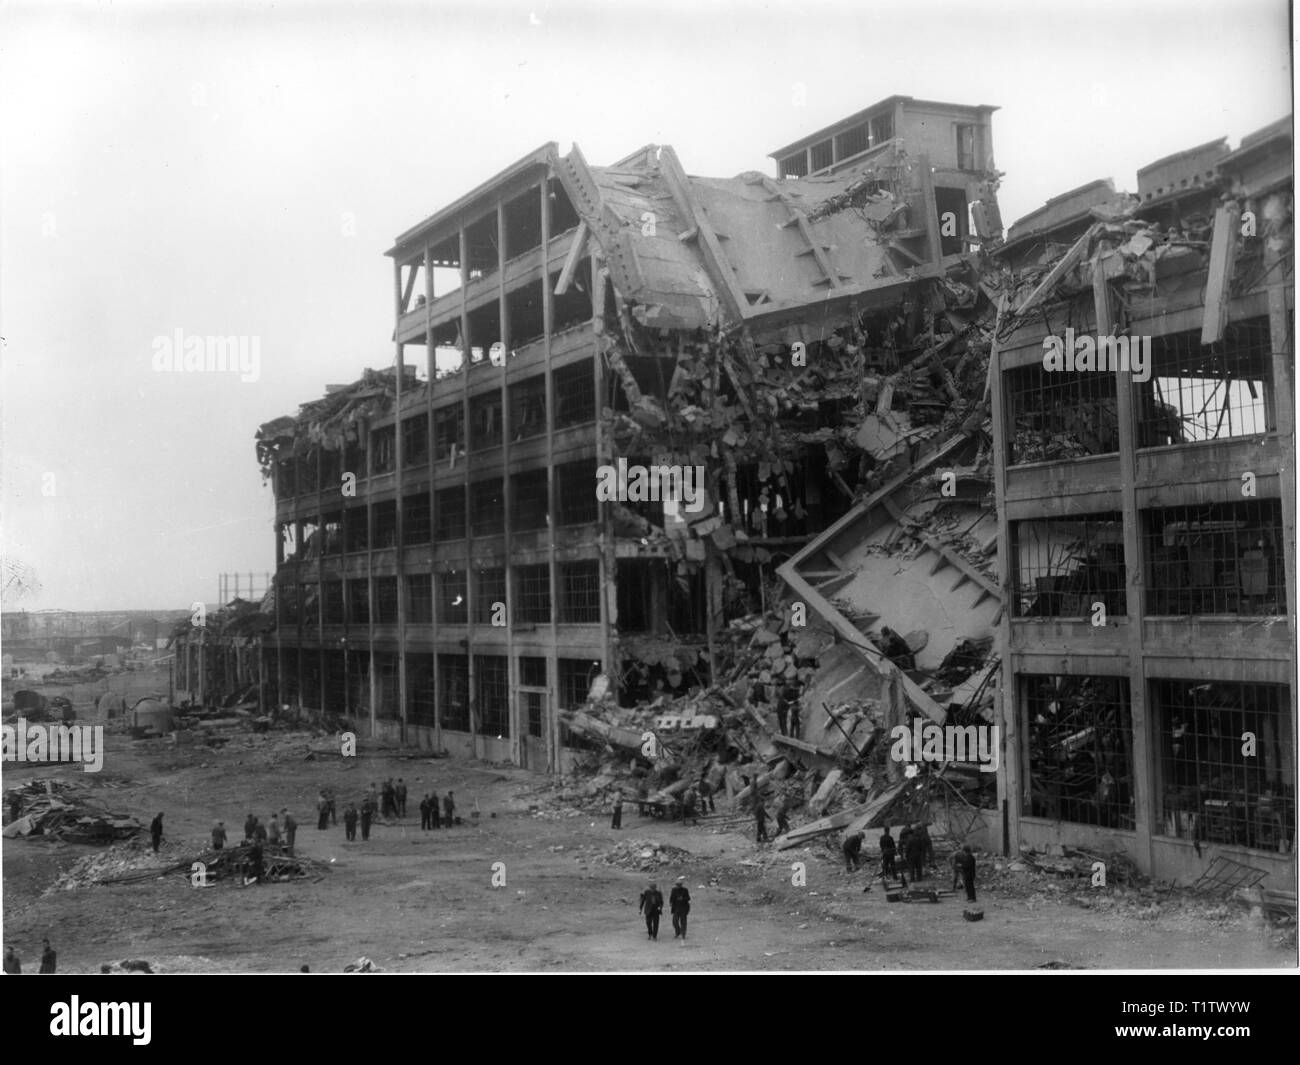 ww2 period, bombing of Turin - Ansaldo Fiat big Motor factory damaged Stock Photo